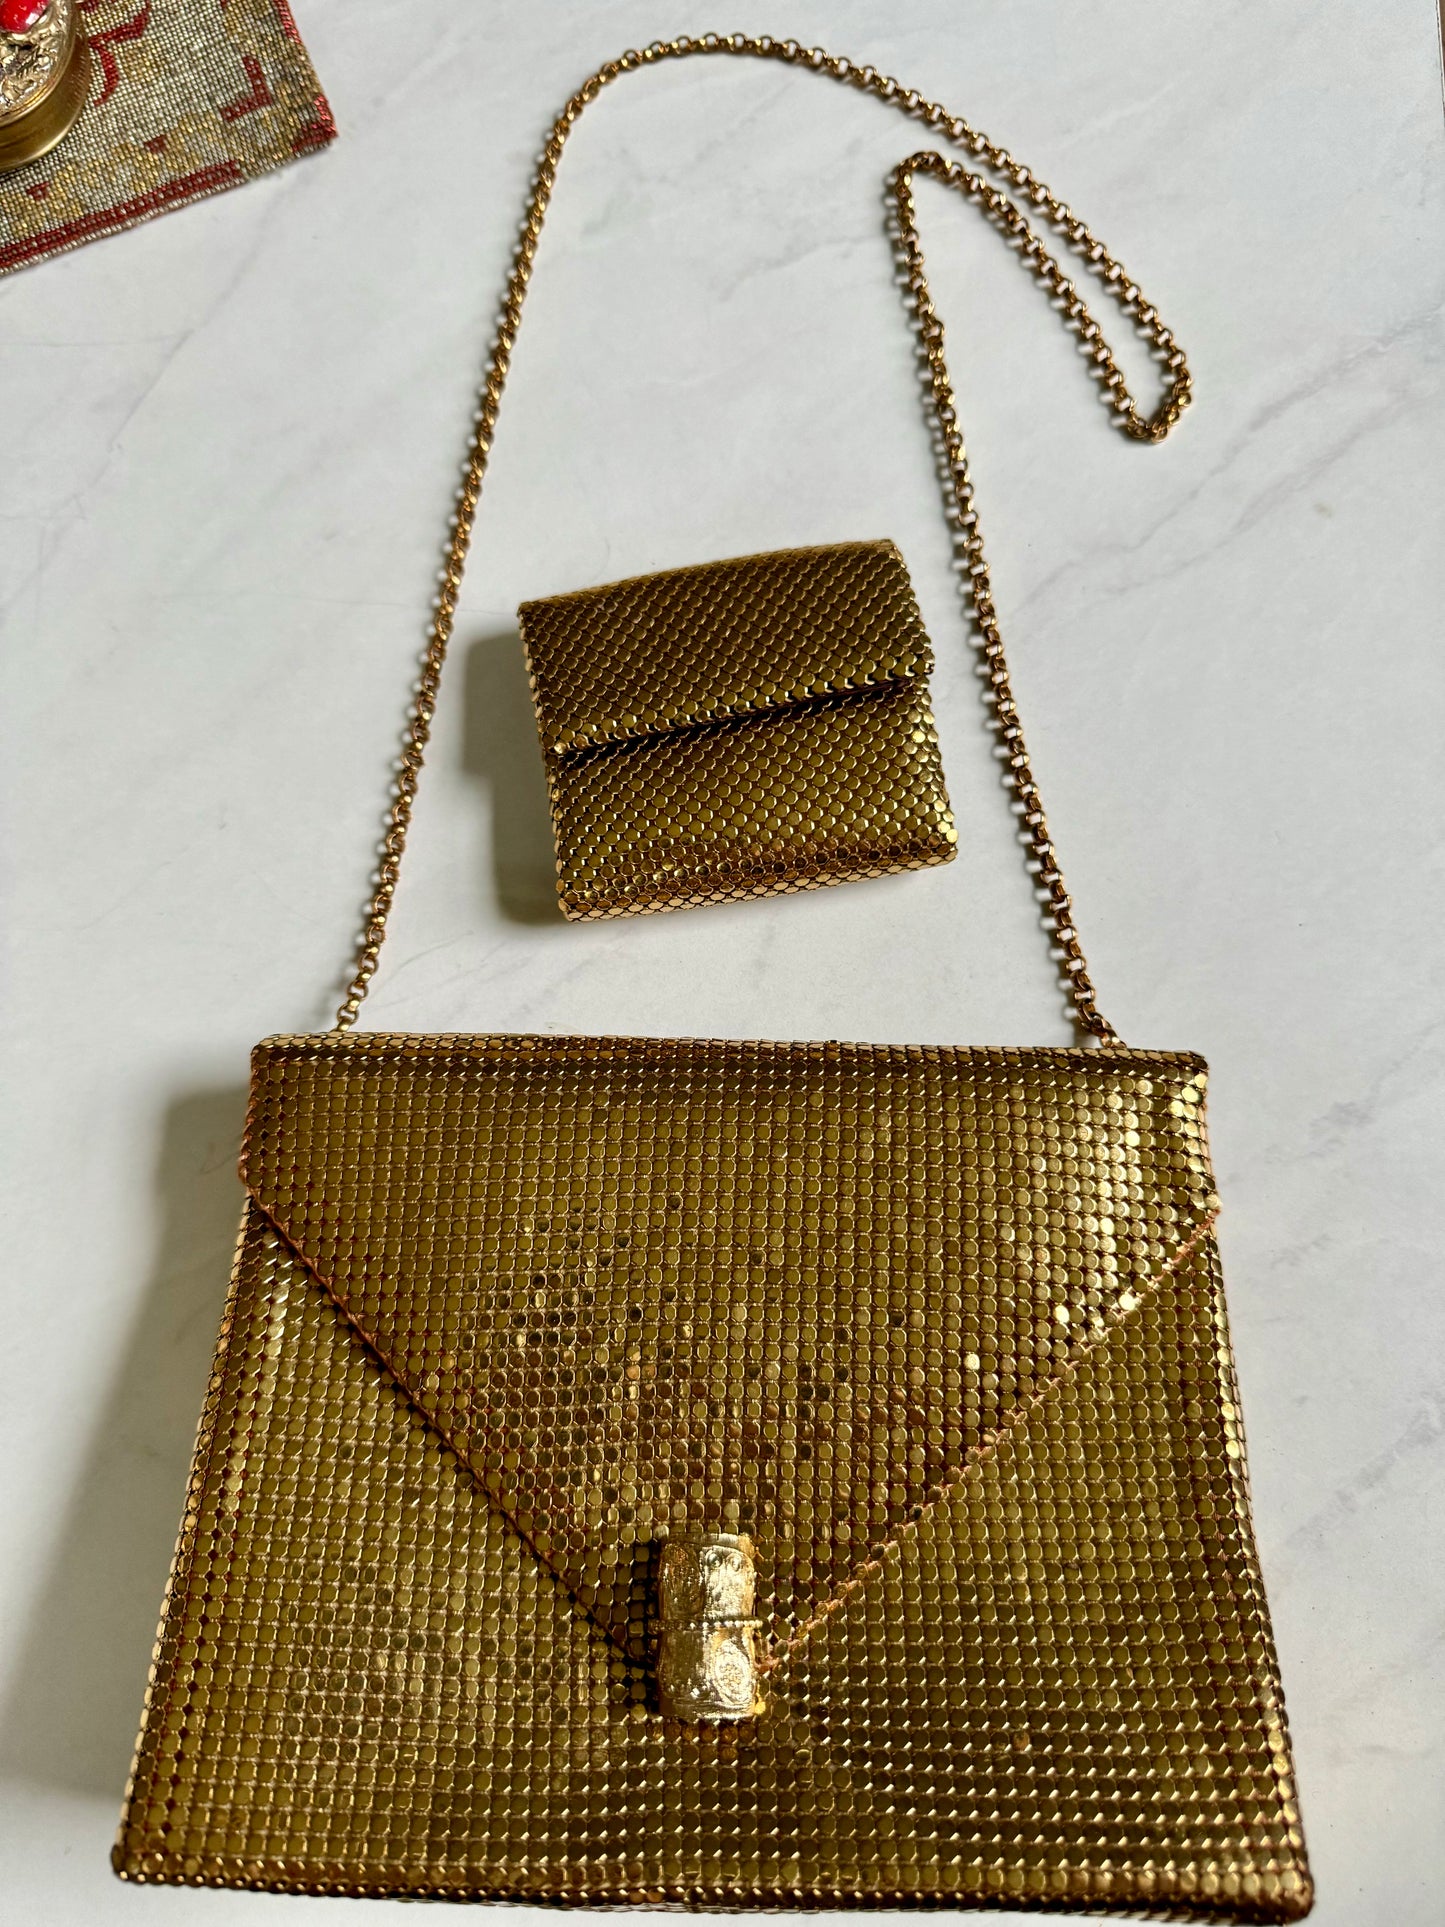 RARE vintage Whiting & Davis shoulder bag with mini wallet